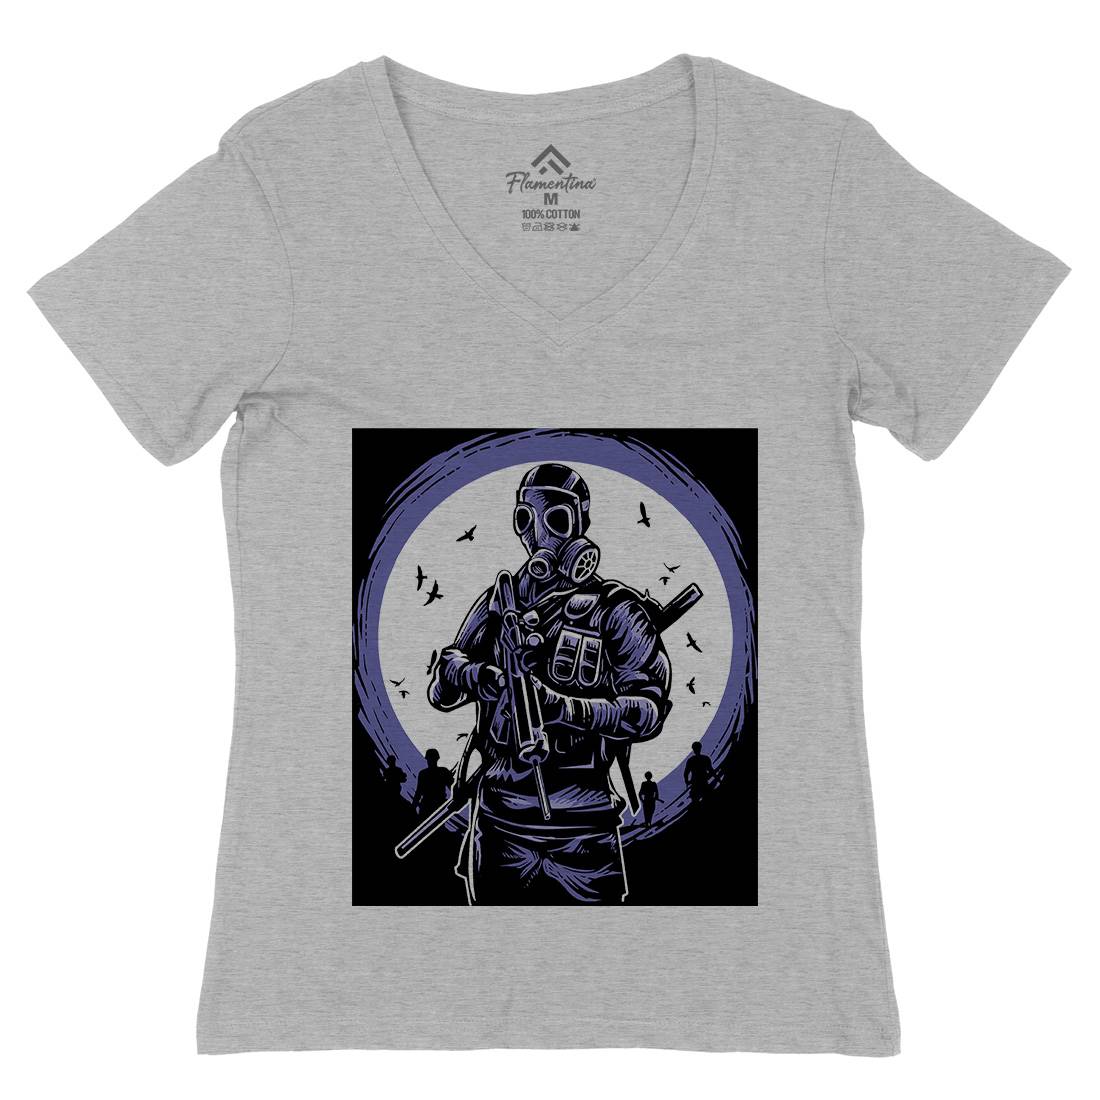 Mask Soldier Womens Organic V-Neck T-Shirt Horror A536